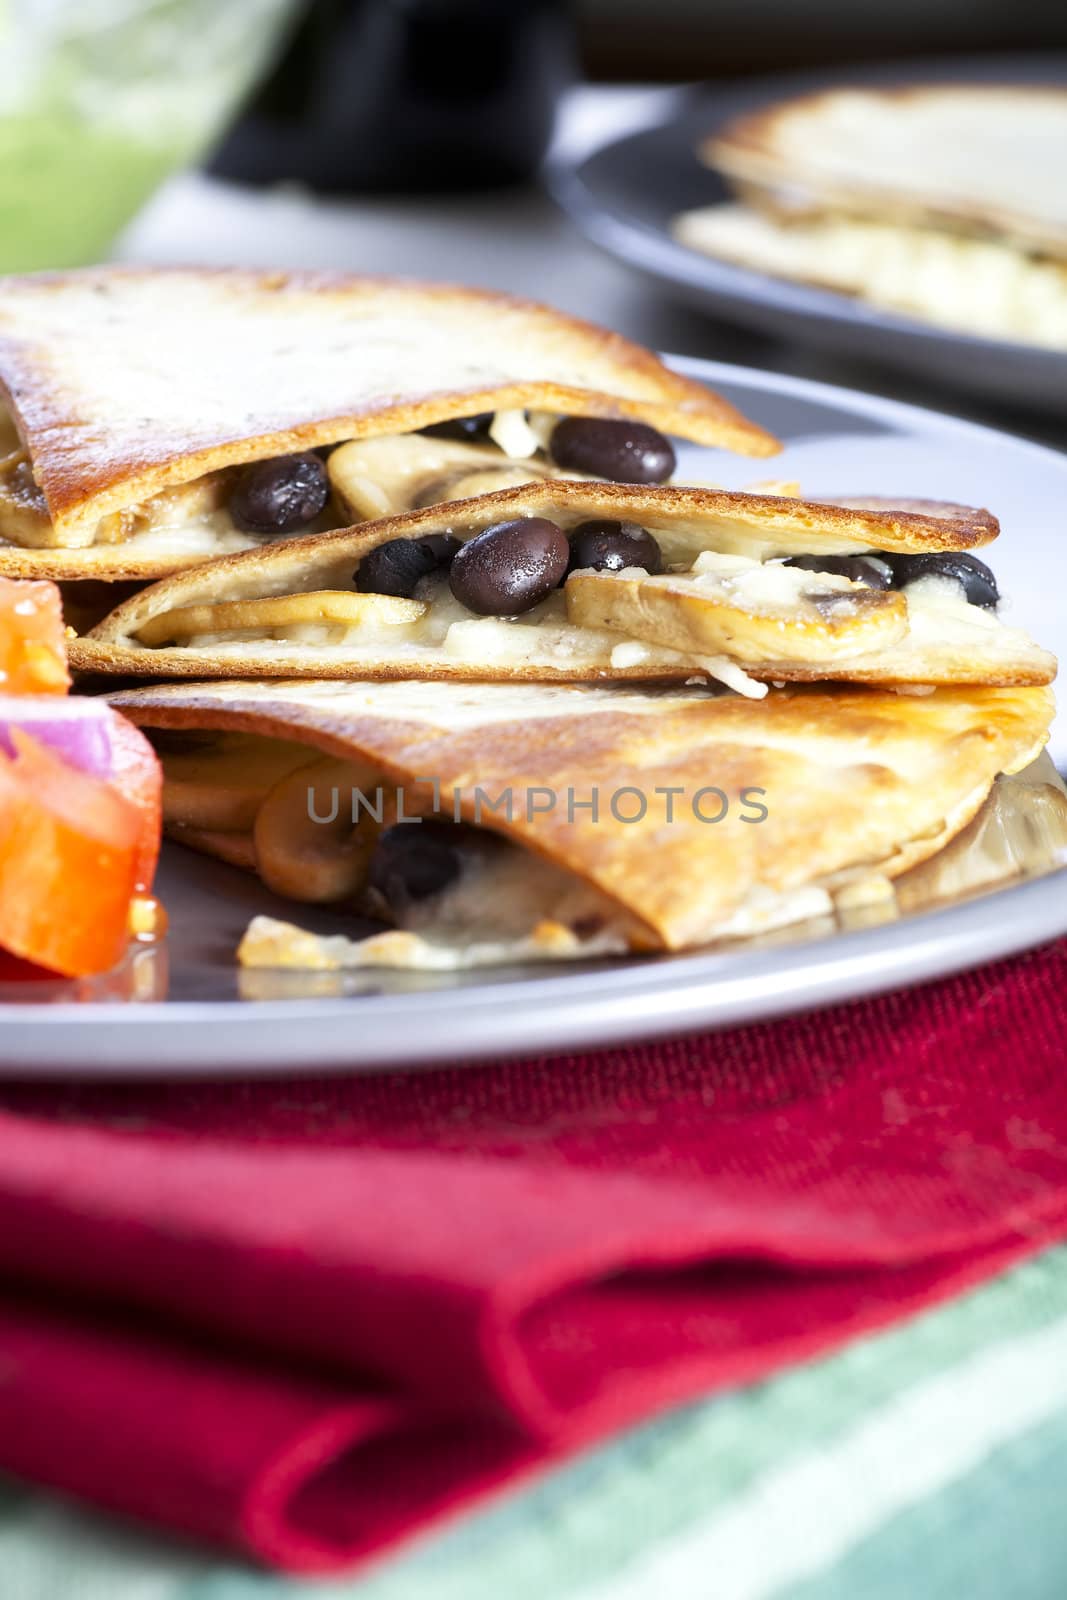 Black bean, mushroom and cheese quesadillas.